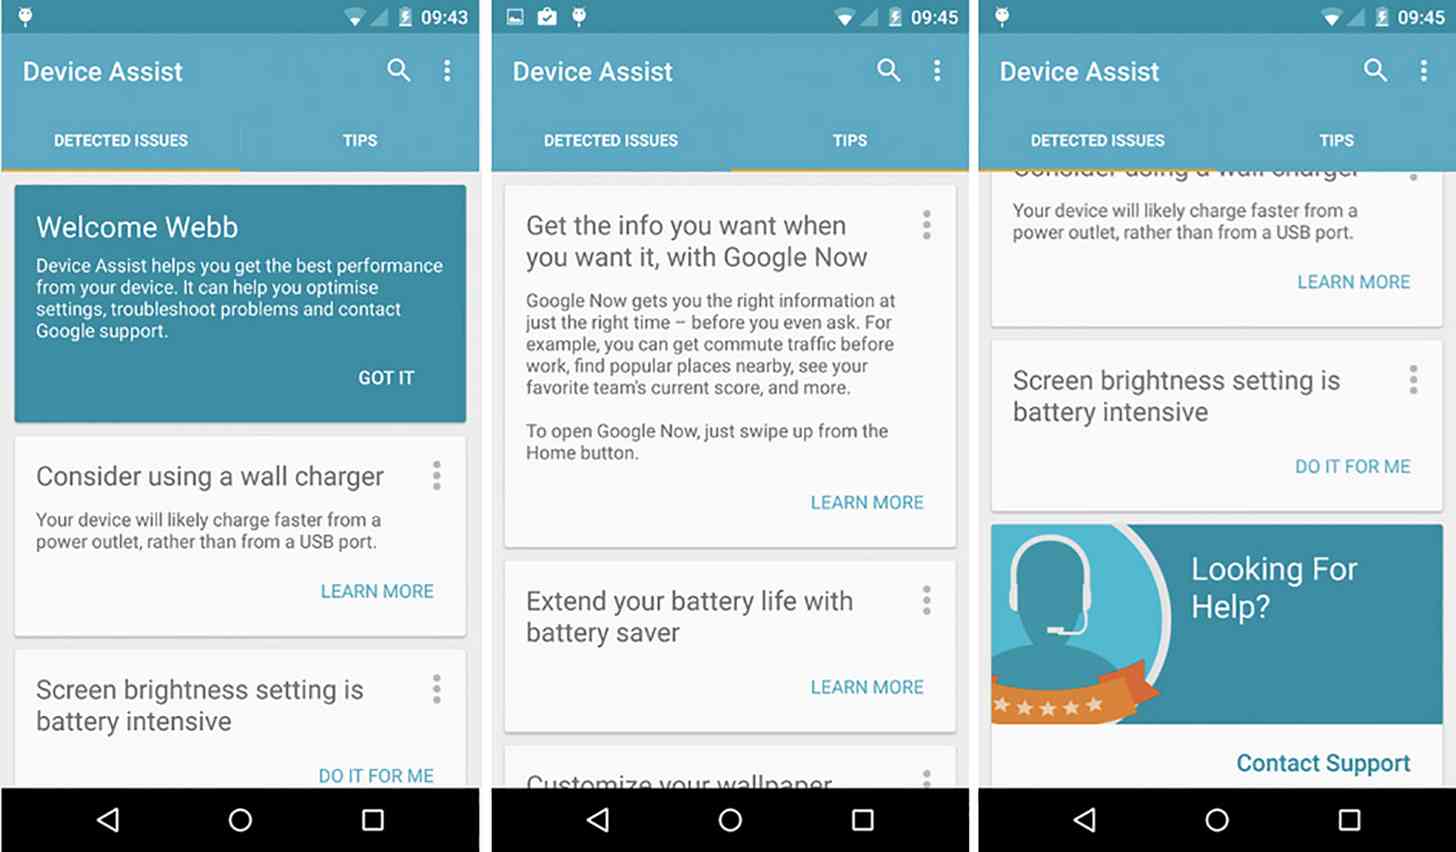 Google Device Assist Android app screenshots